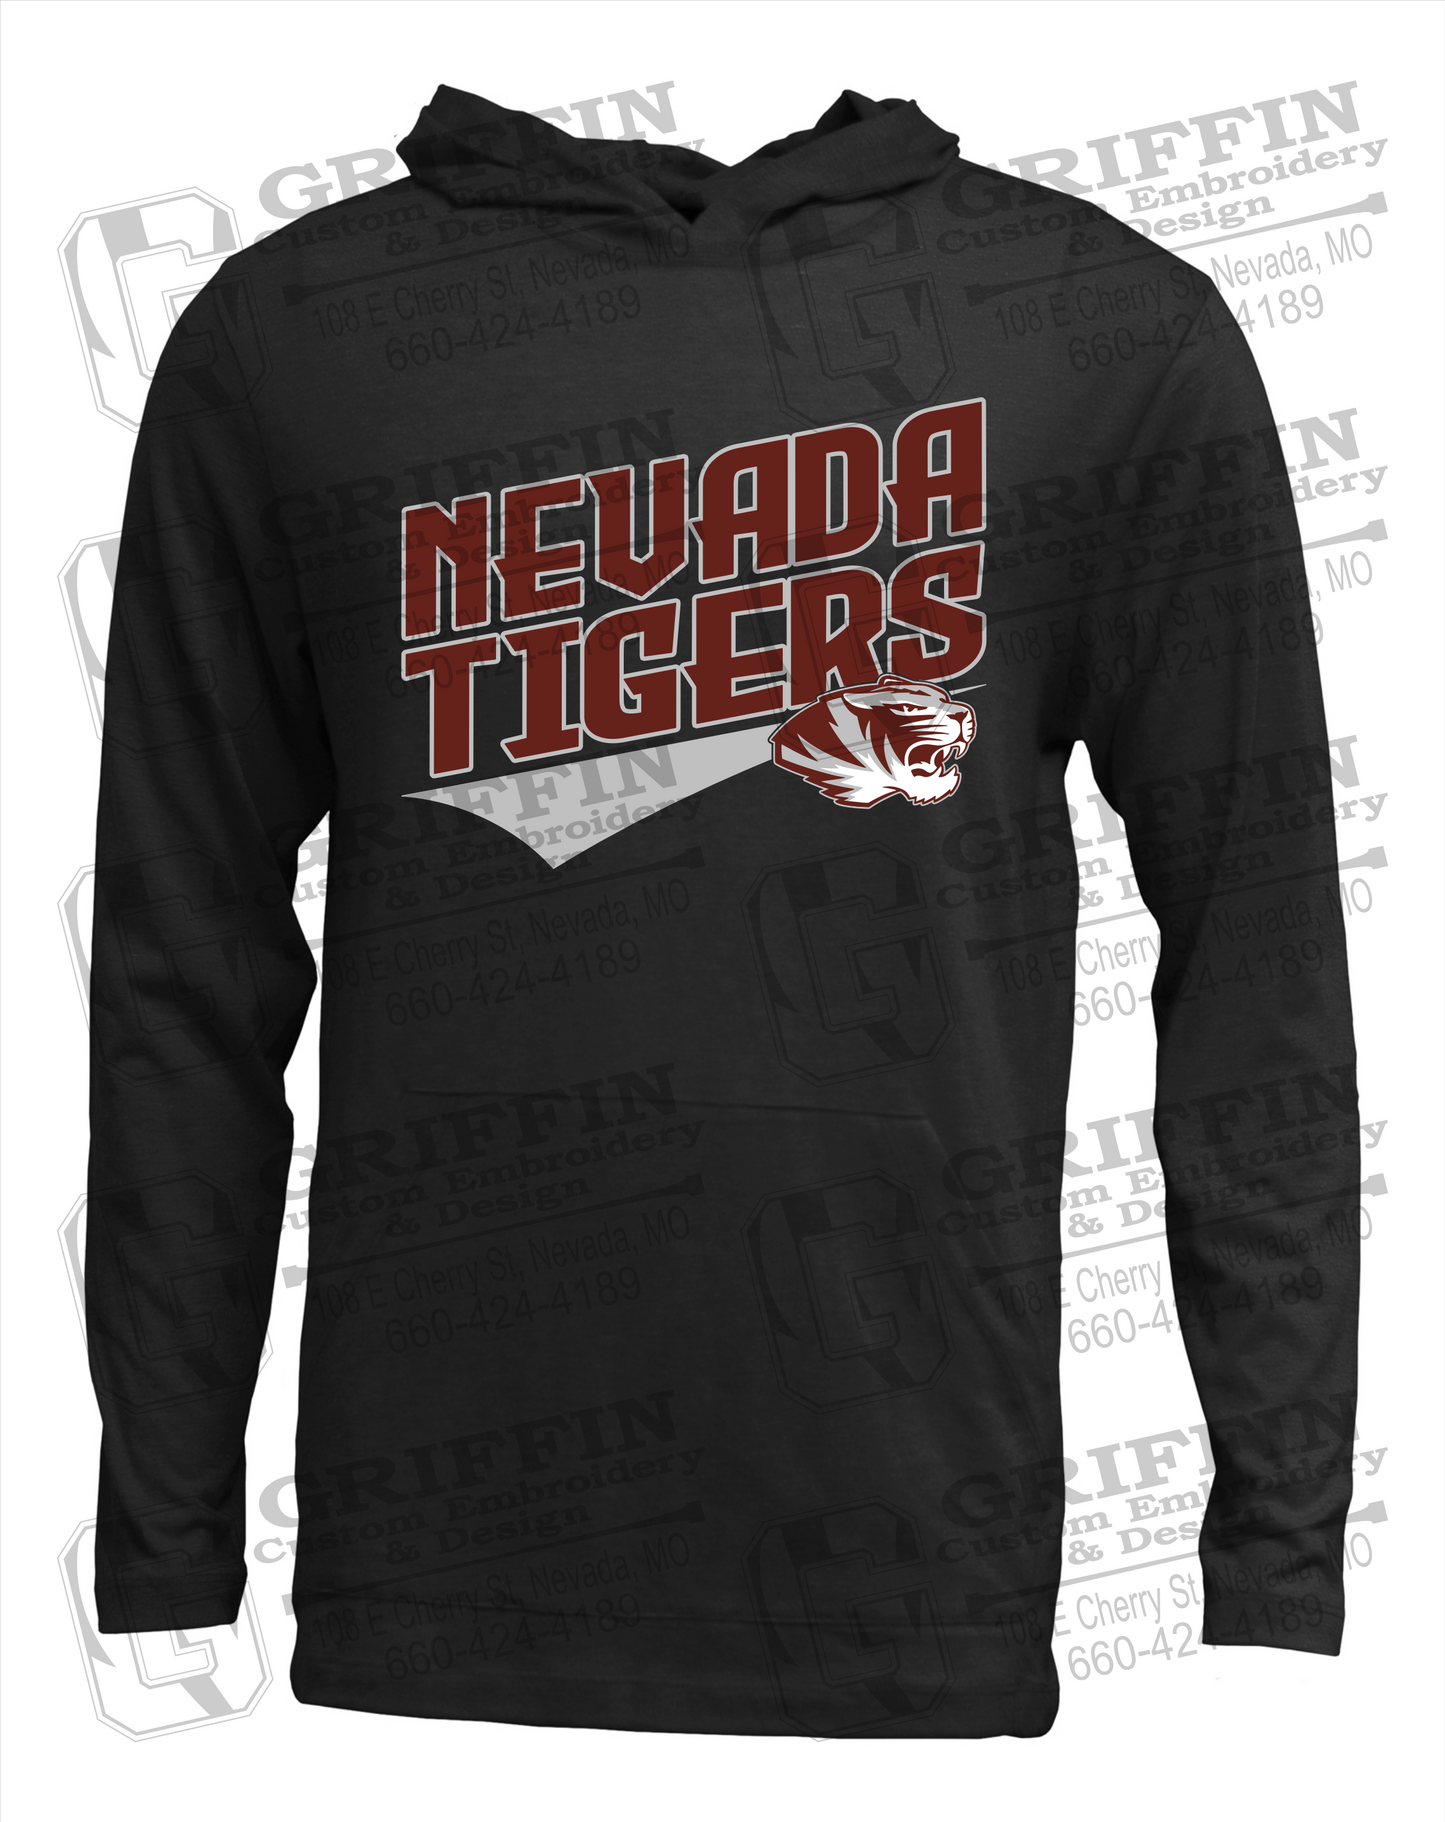 Soft-Tek T-Shirt Hoodie - Nevada Tigers 21-E